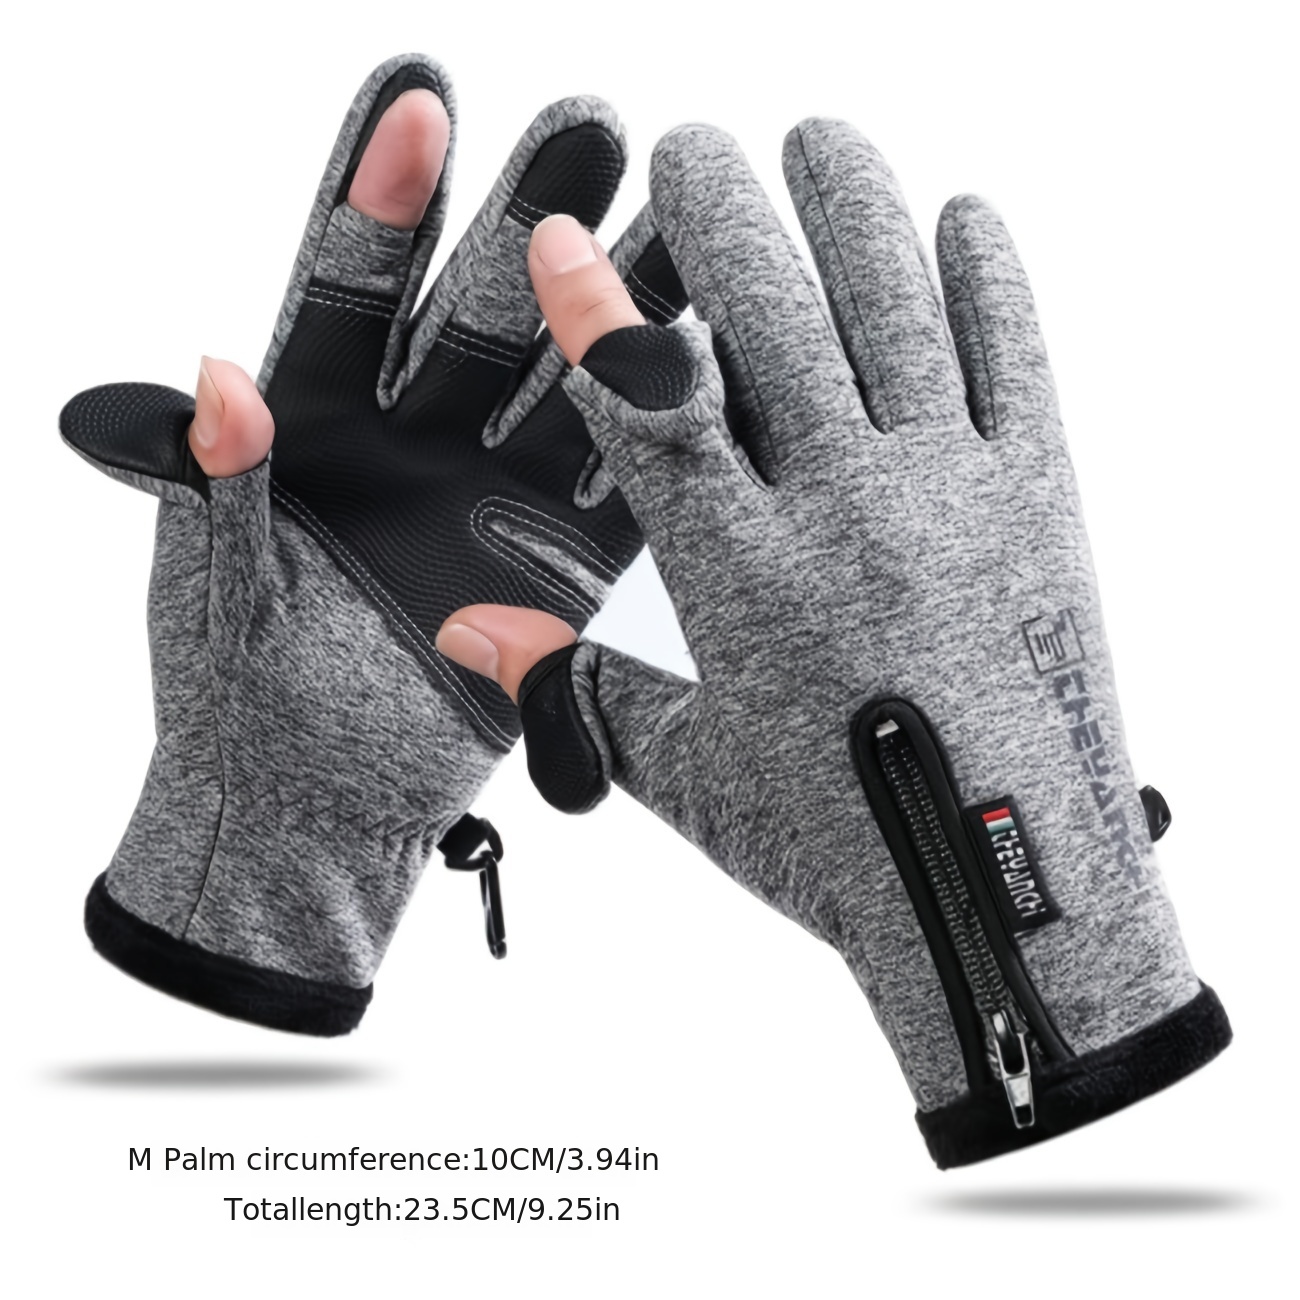 Warm Fishing Gloves, Warm, Windproof, Water Repellent